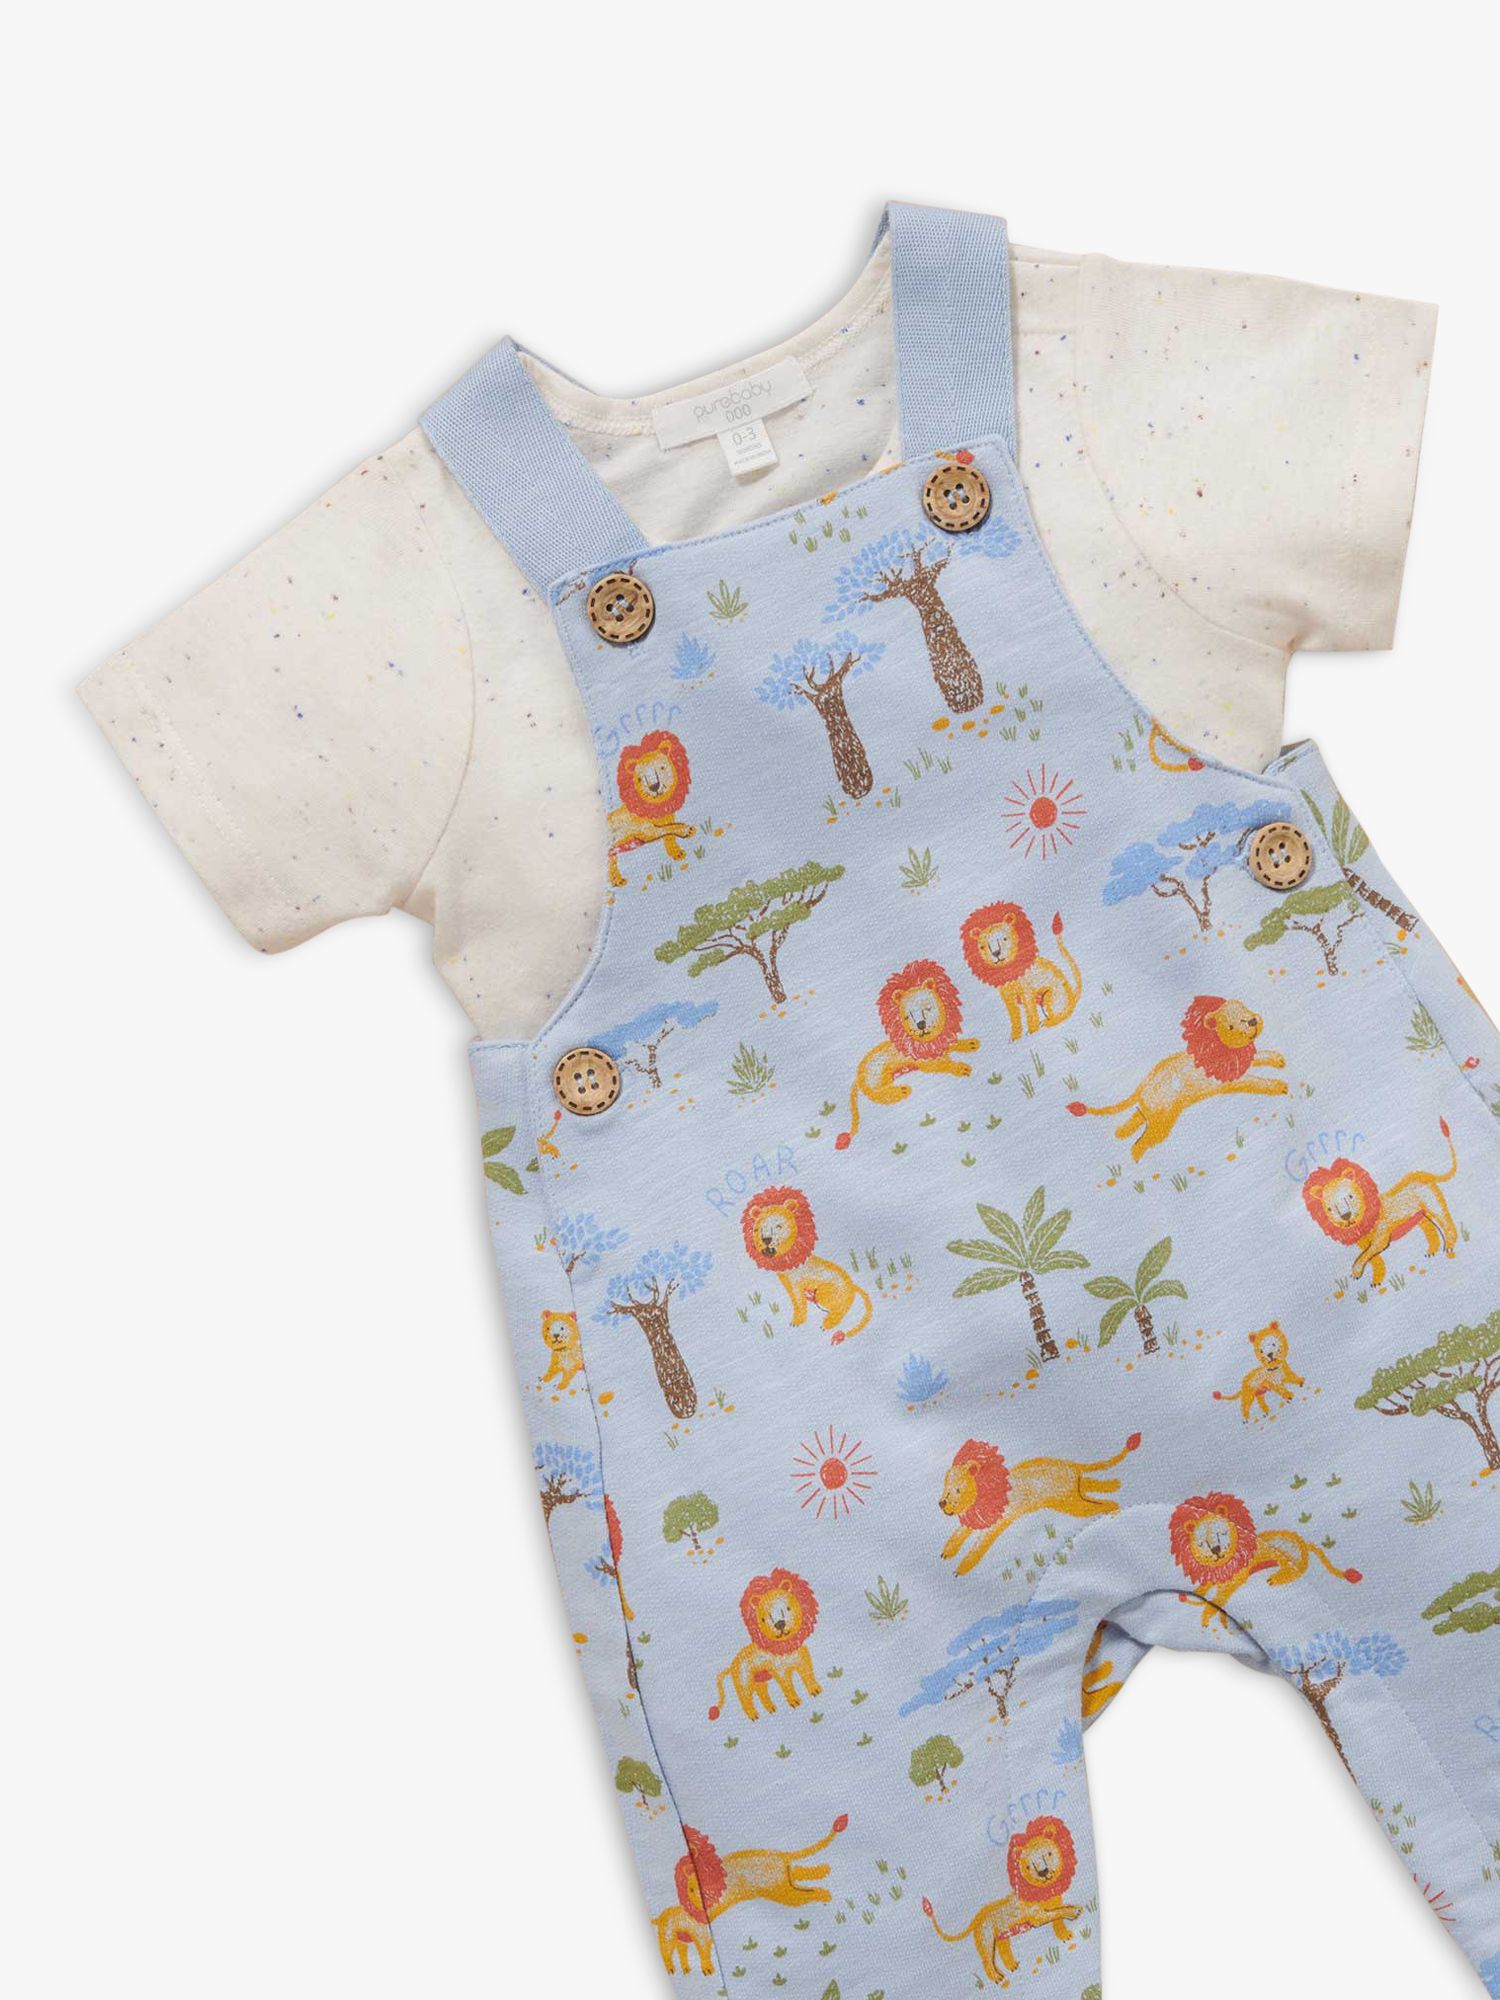 Purebaby Baby Organic Cotton Safari Print Overall & T-Shirt Set, Lion Print, 18-24 months